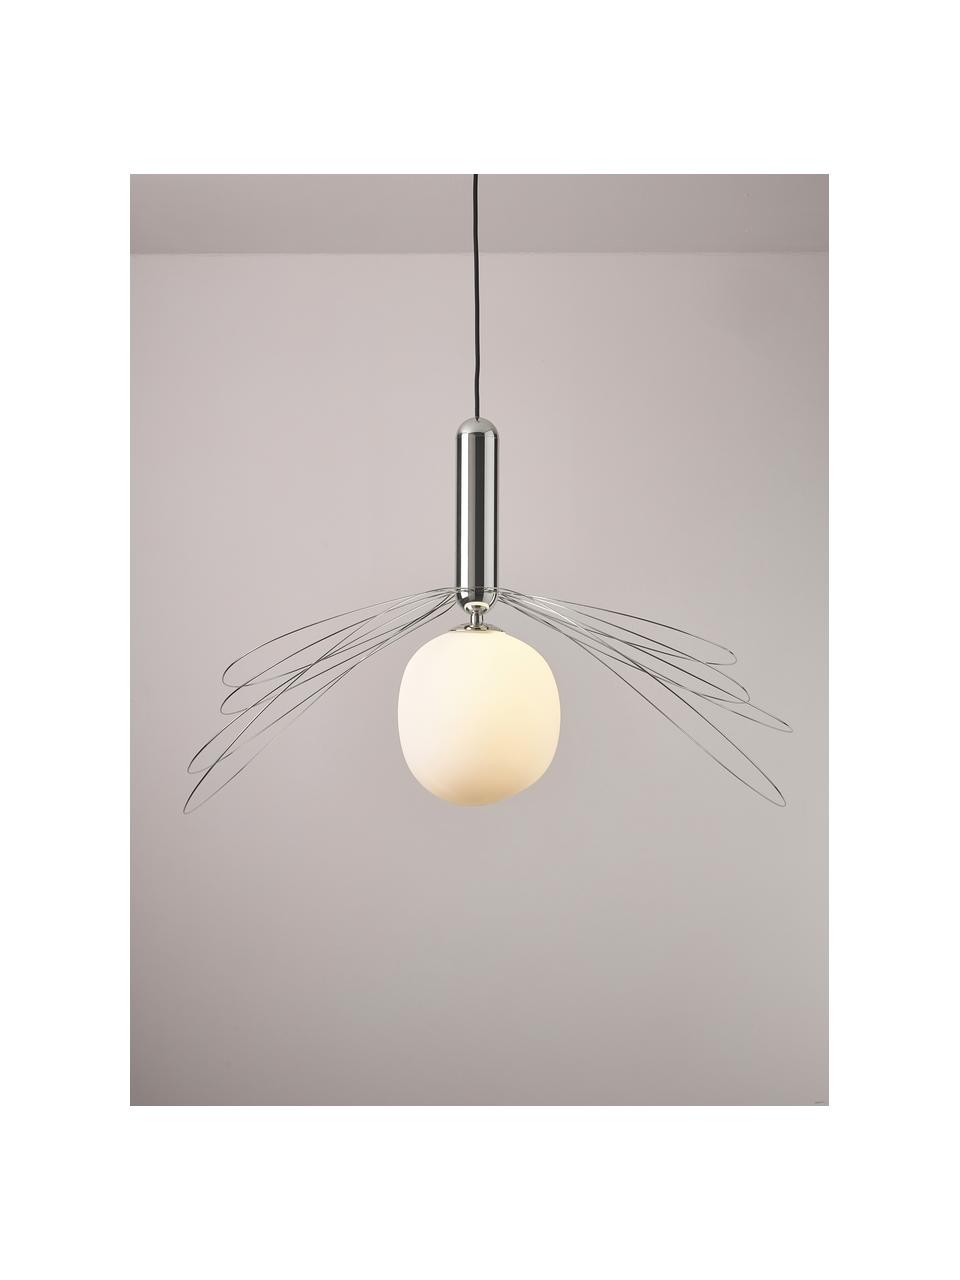 Grote hanglamp Dela, Lampenkap: glas, Wit, zilverkleurig, Ø 21 x H 26 cm